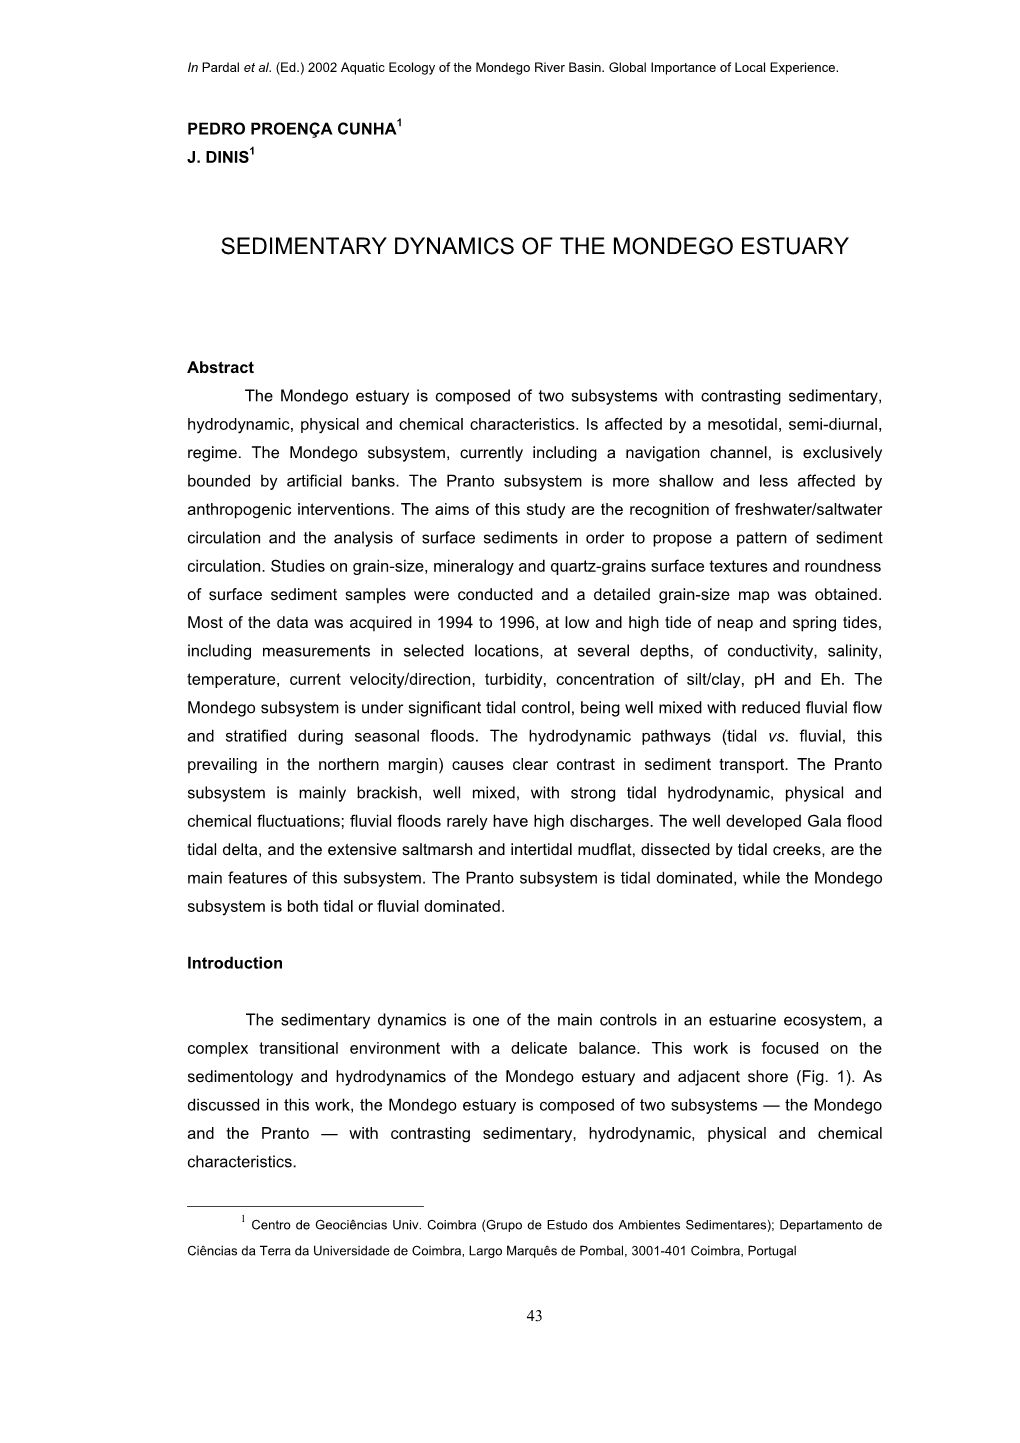 Sedimentary Dynamics of the Mondego Estuary